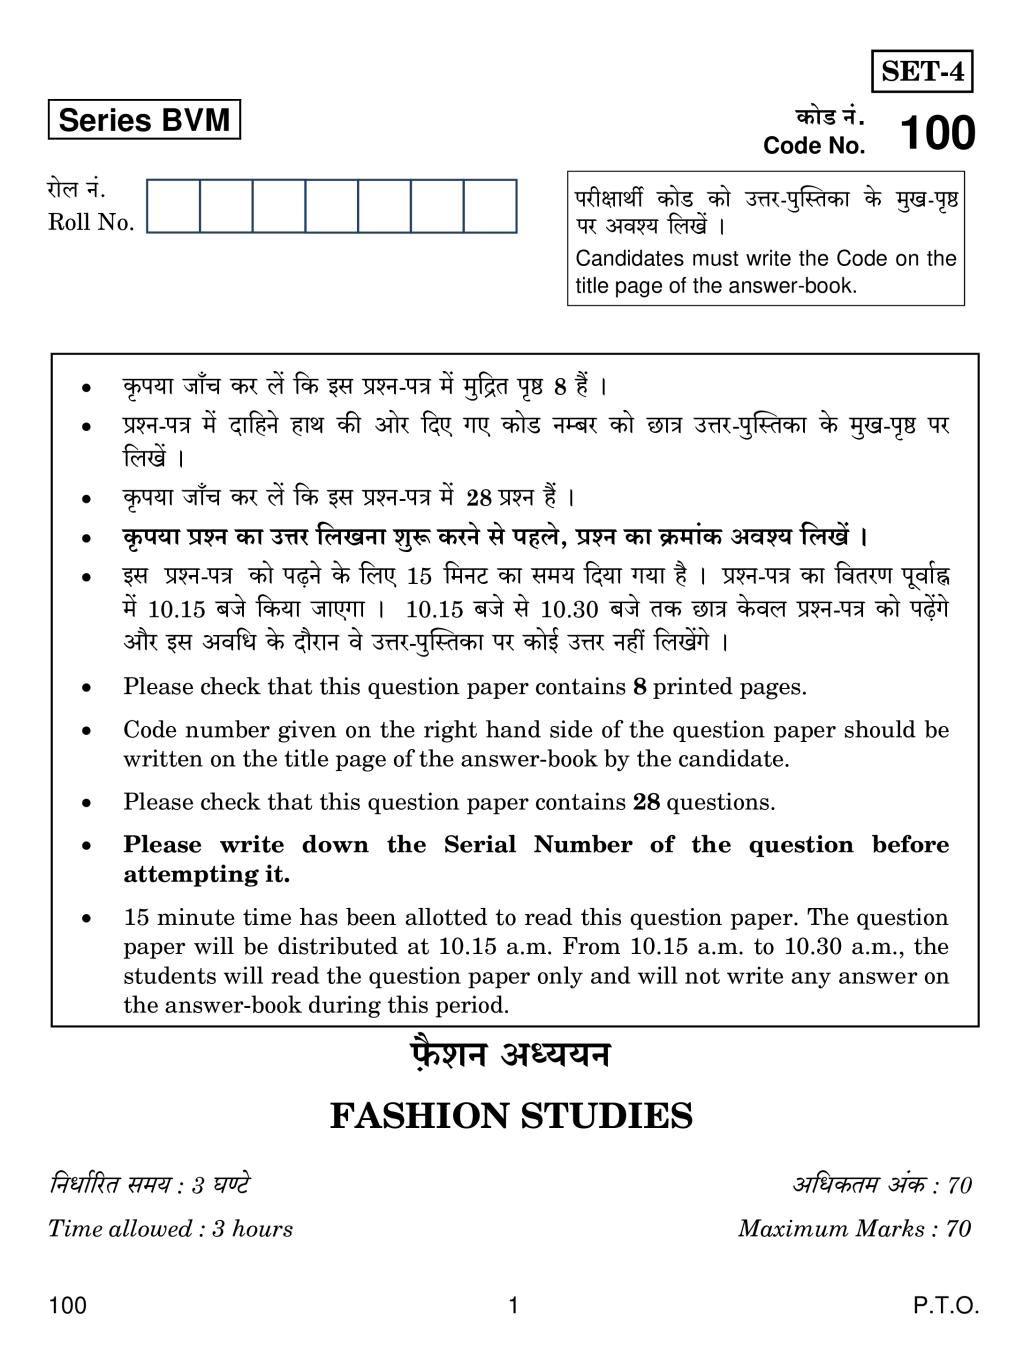 CBSE Class 12 Fashion Studies Question Paper 2019 - Page 1